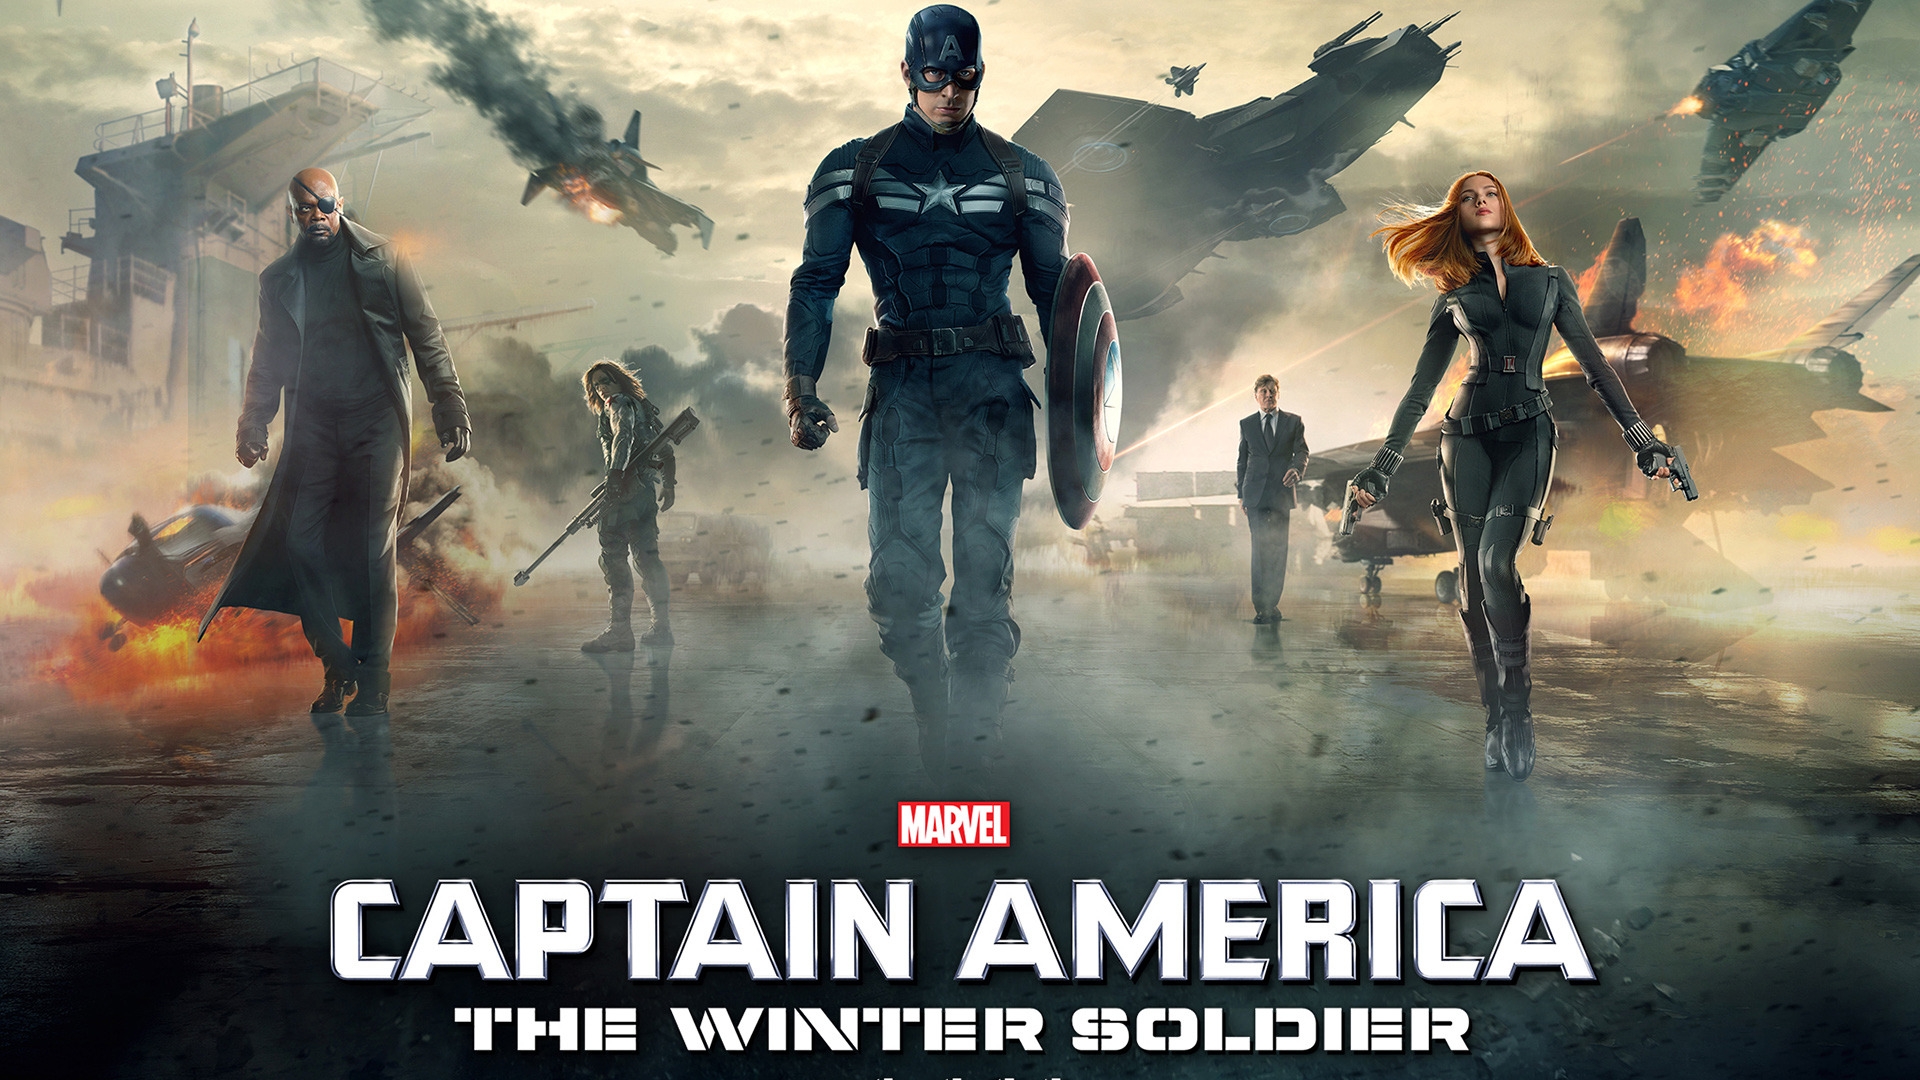 Captain America 2 Movie for 1920 x 1080 HDTV 1080p resolution